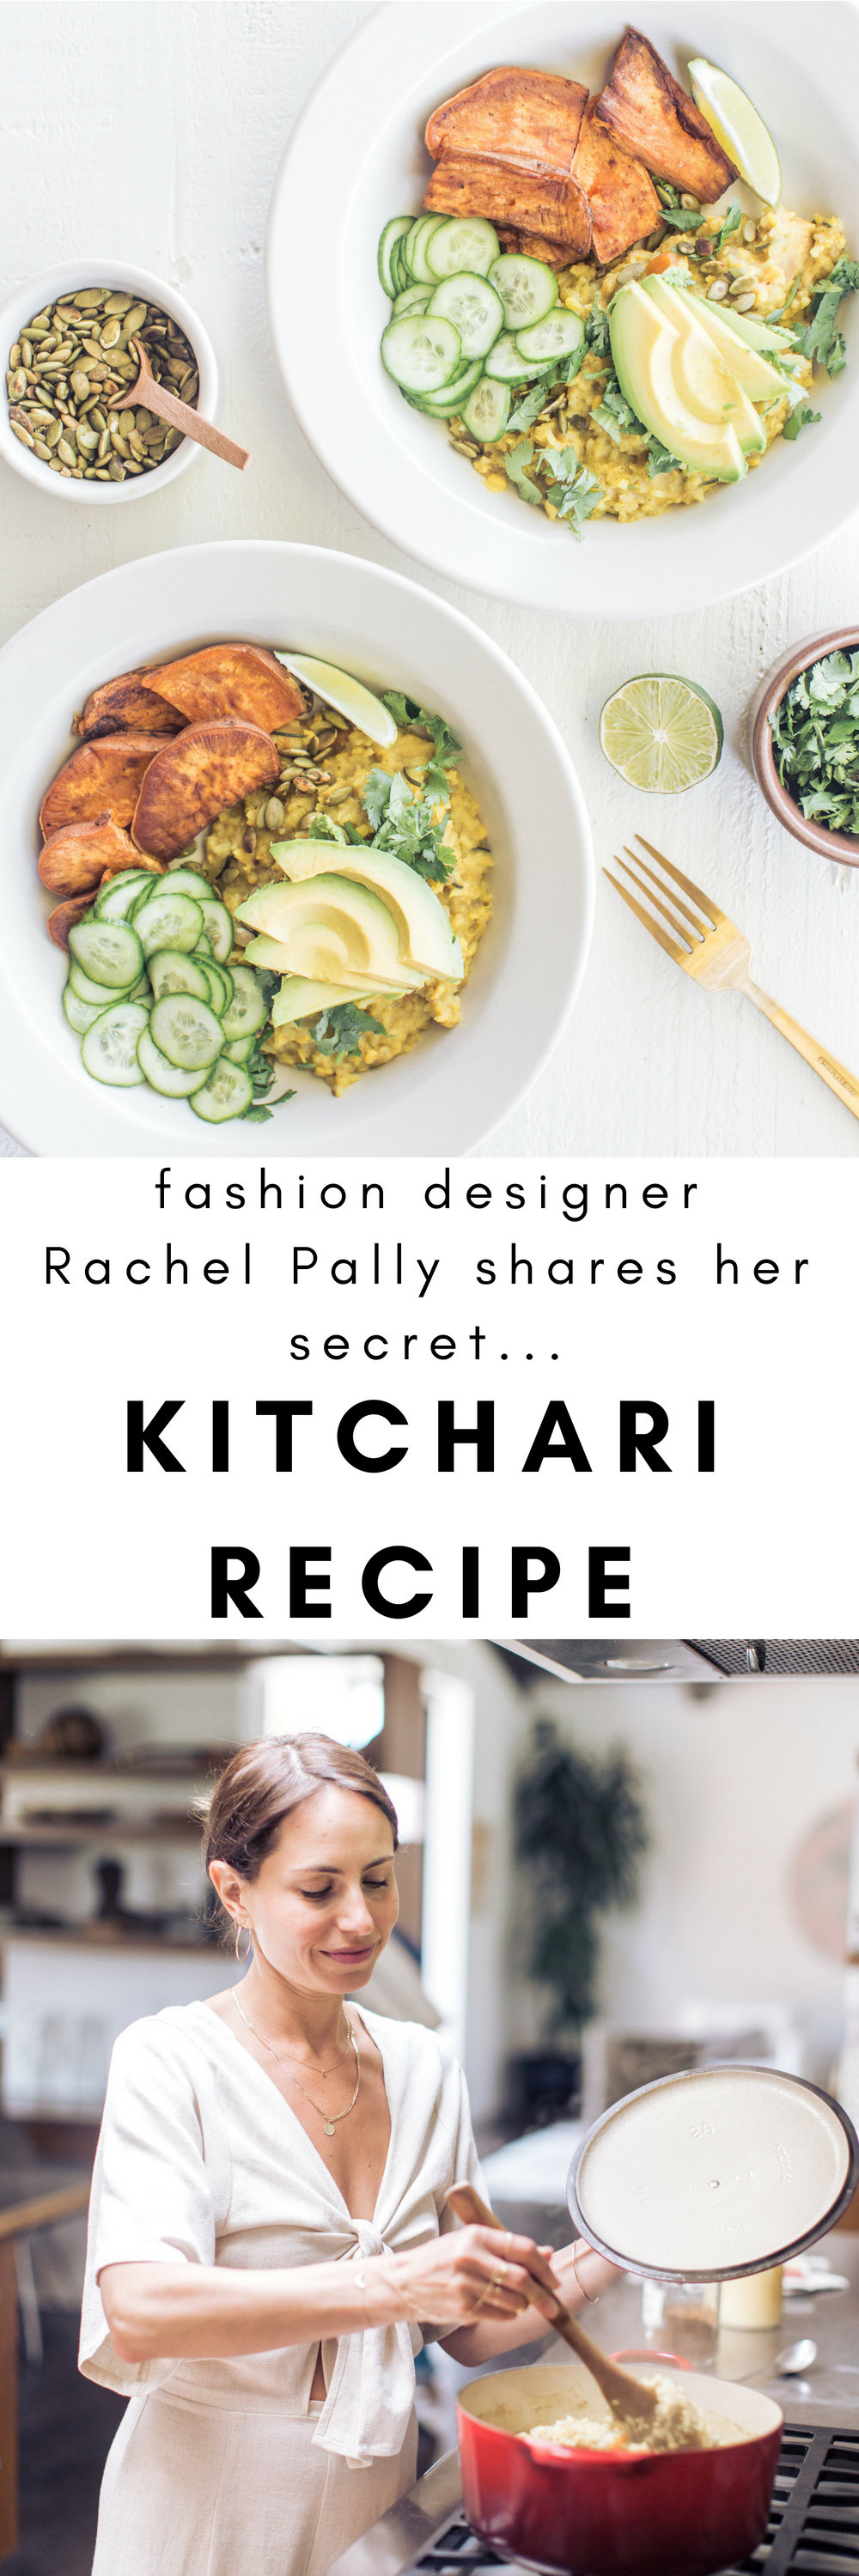 in the kitchen with fashion designer Rachel Pally